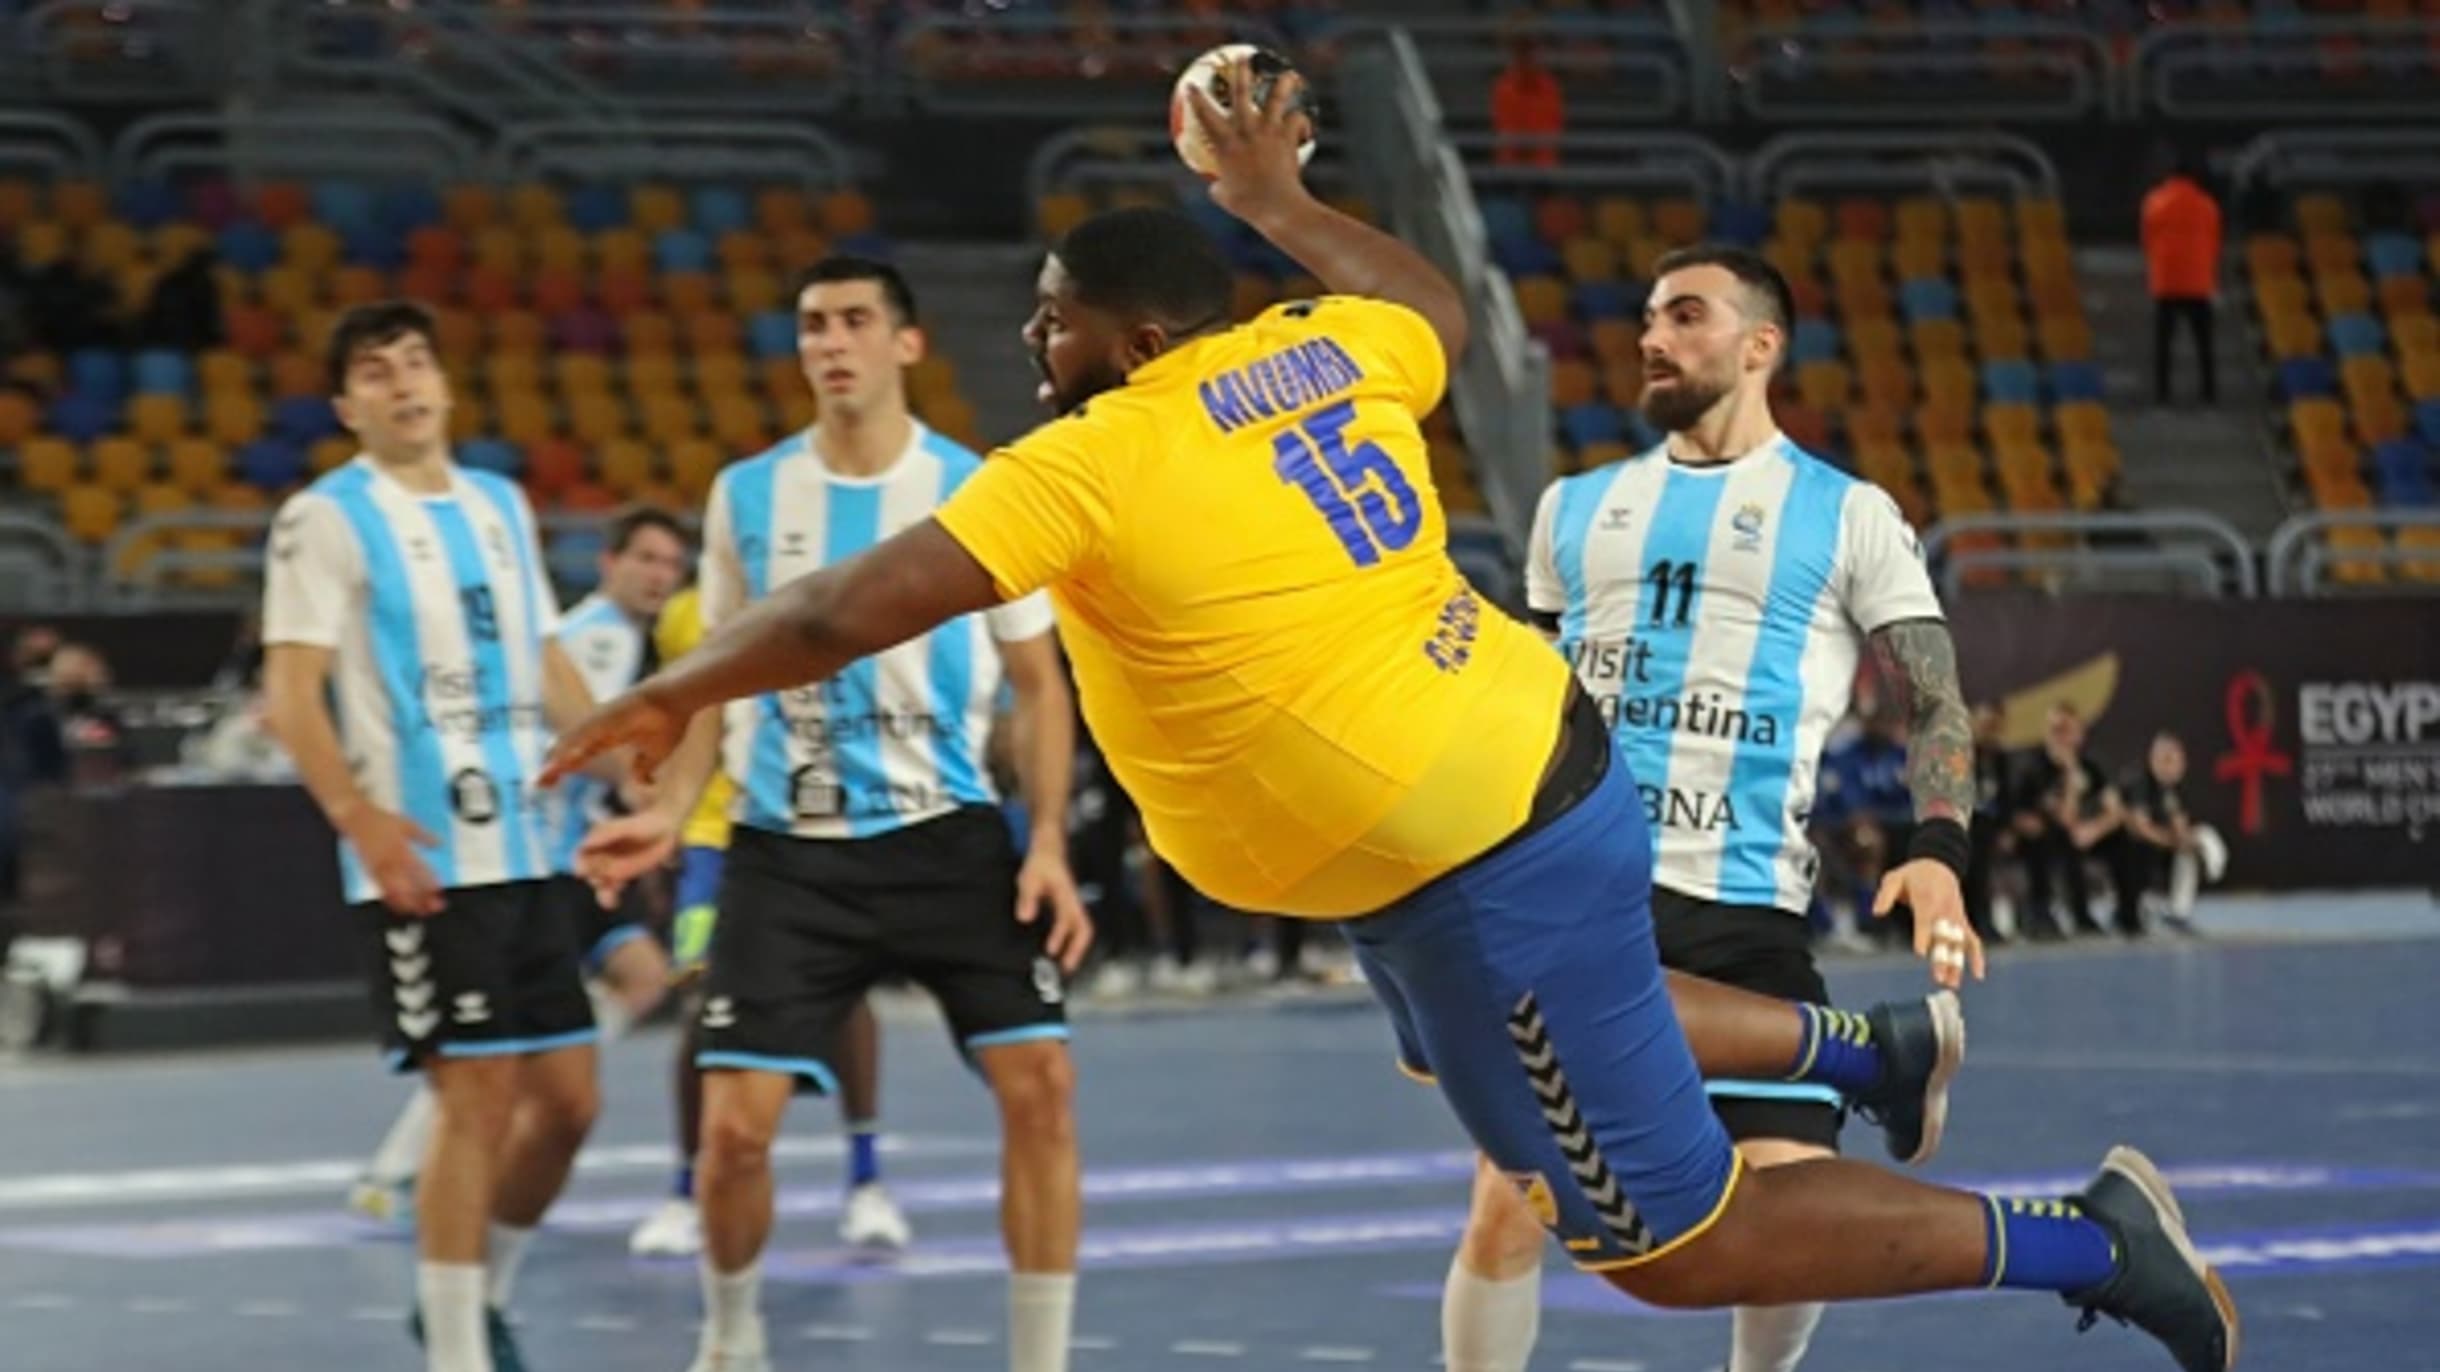 Congos handball star Mvumbi gets shout-out from Shaq